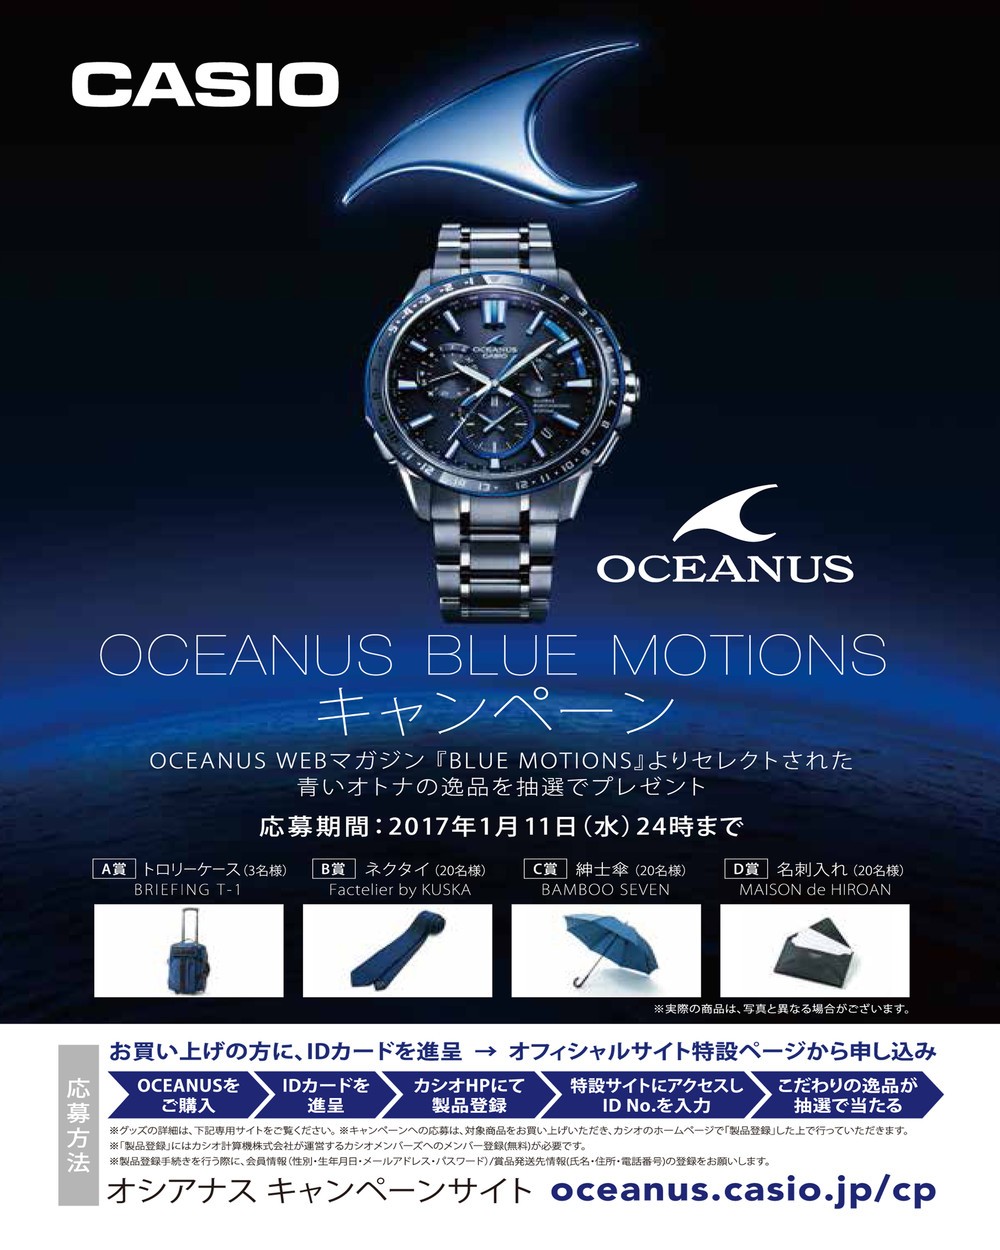 「OCEANUS BLUE MOTIONS キャンペーン」